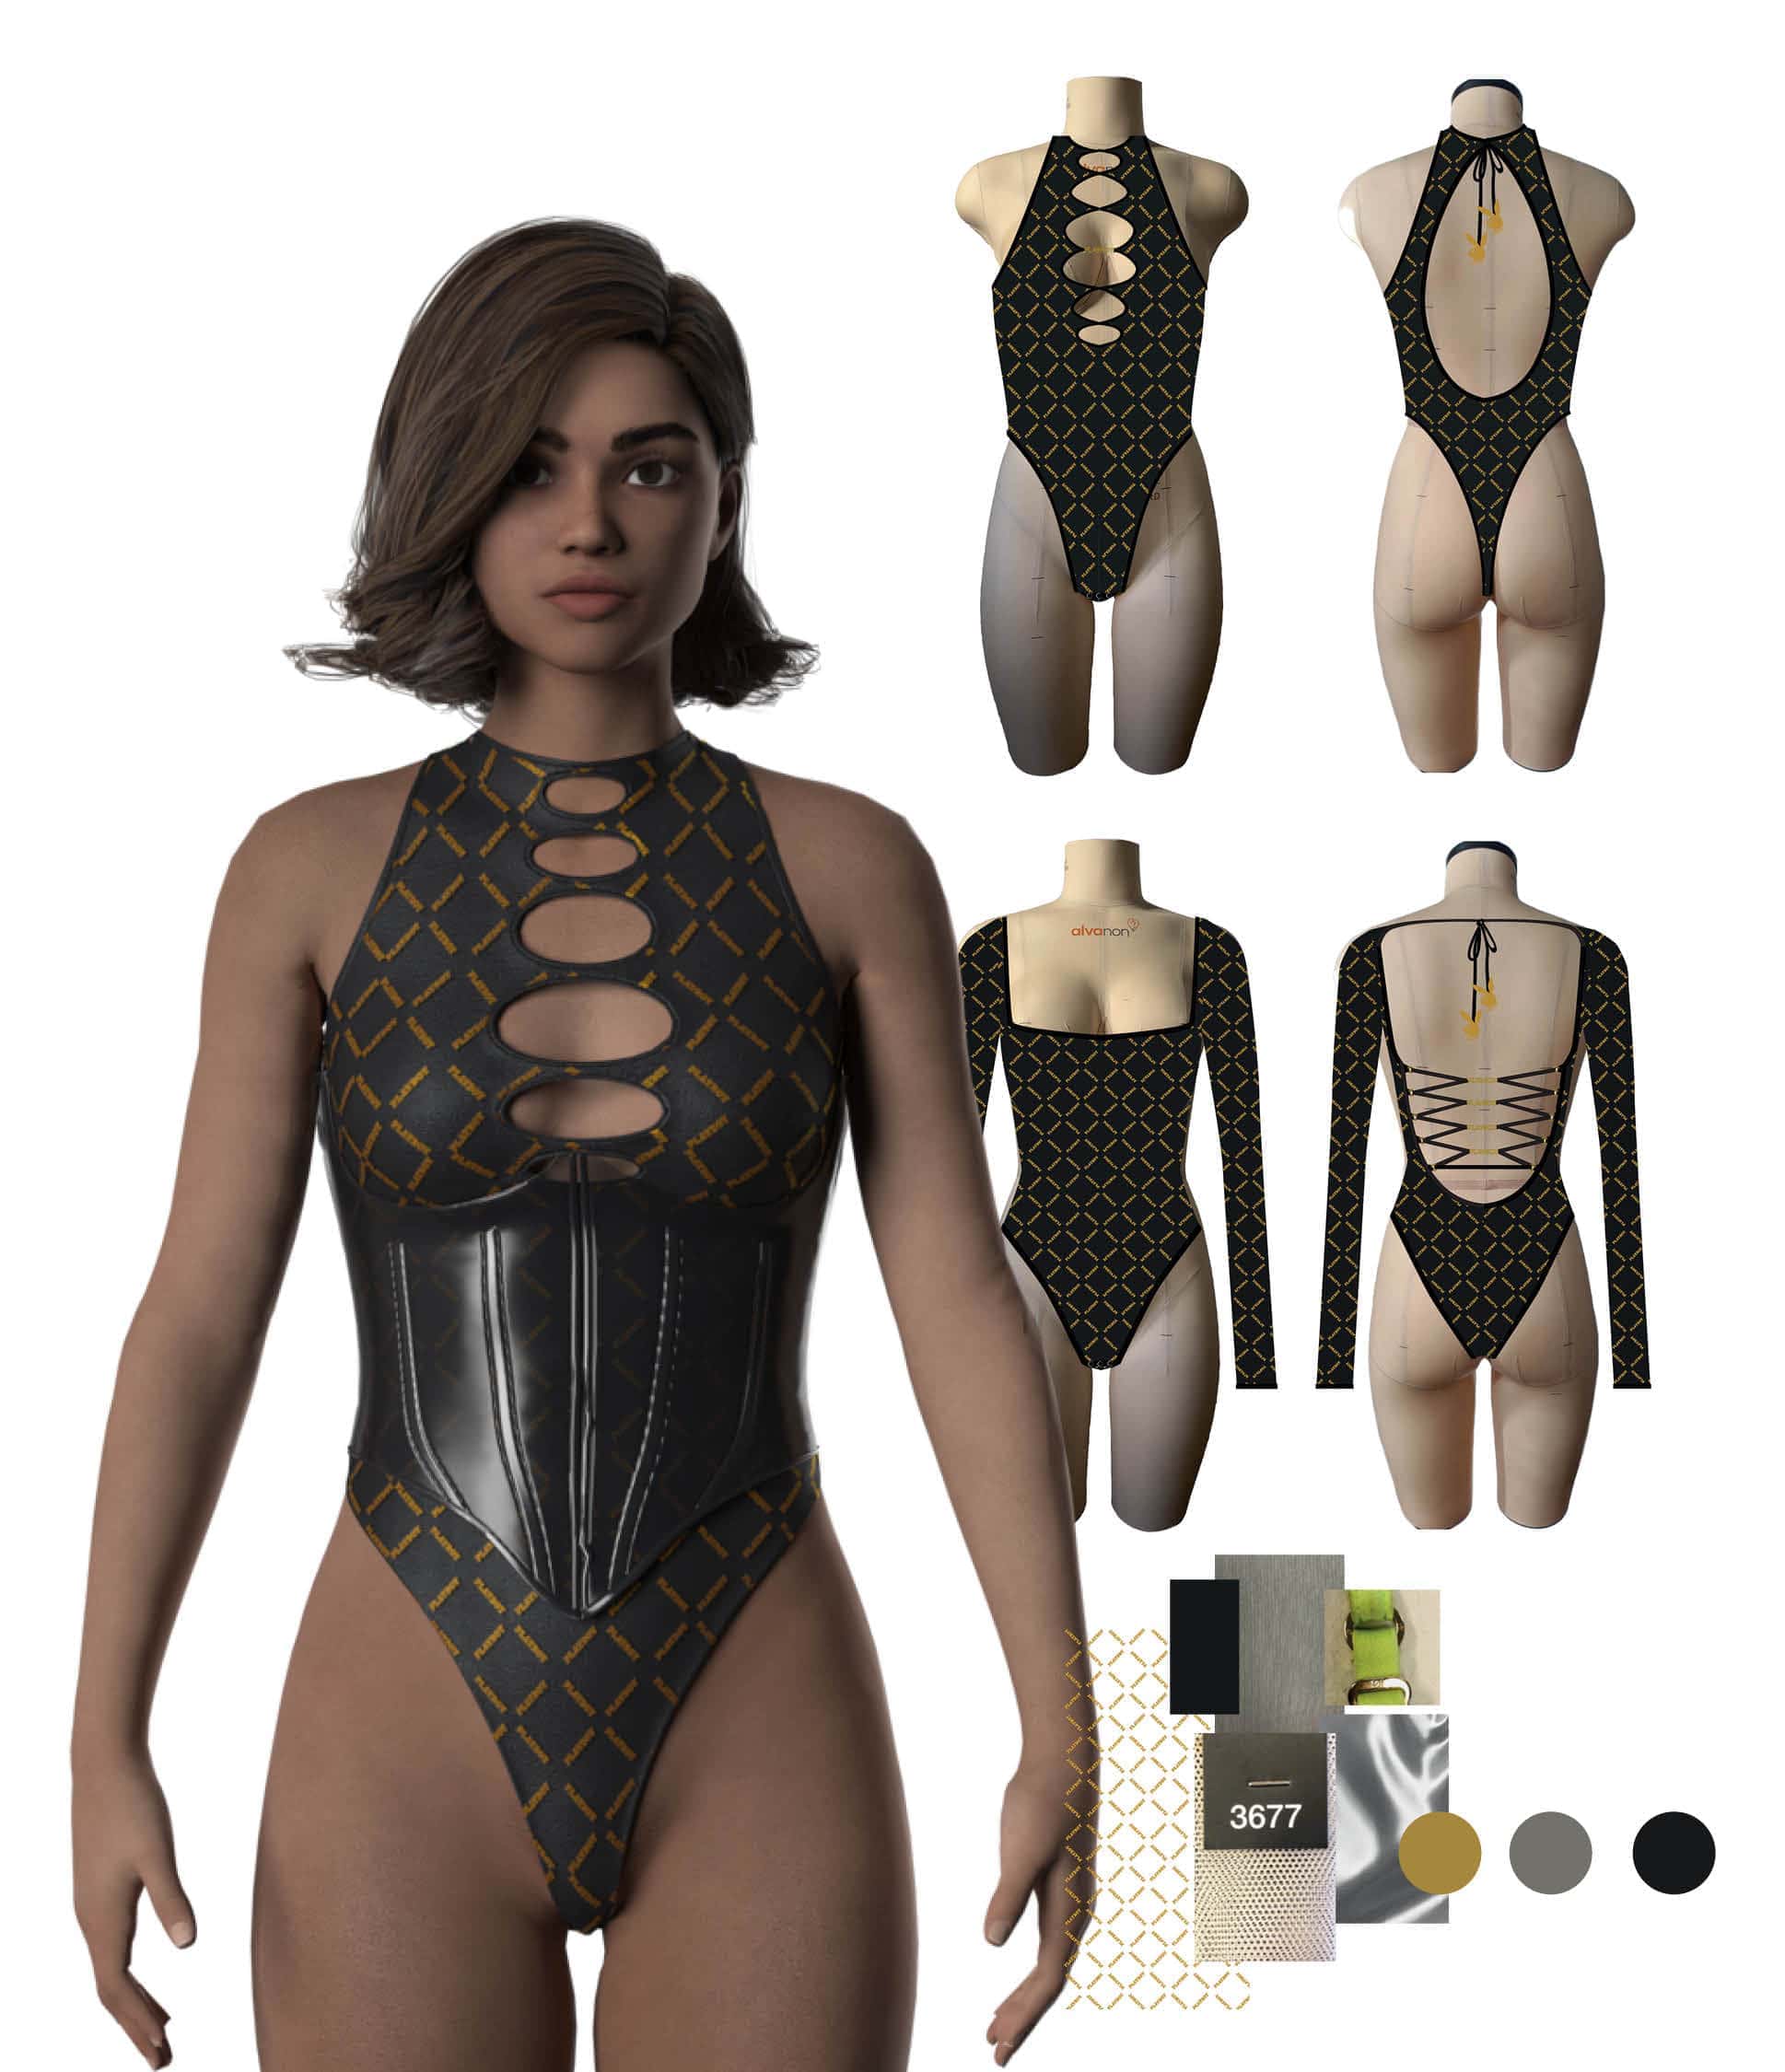 3D bodysuit design for Playboy